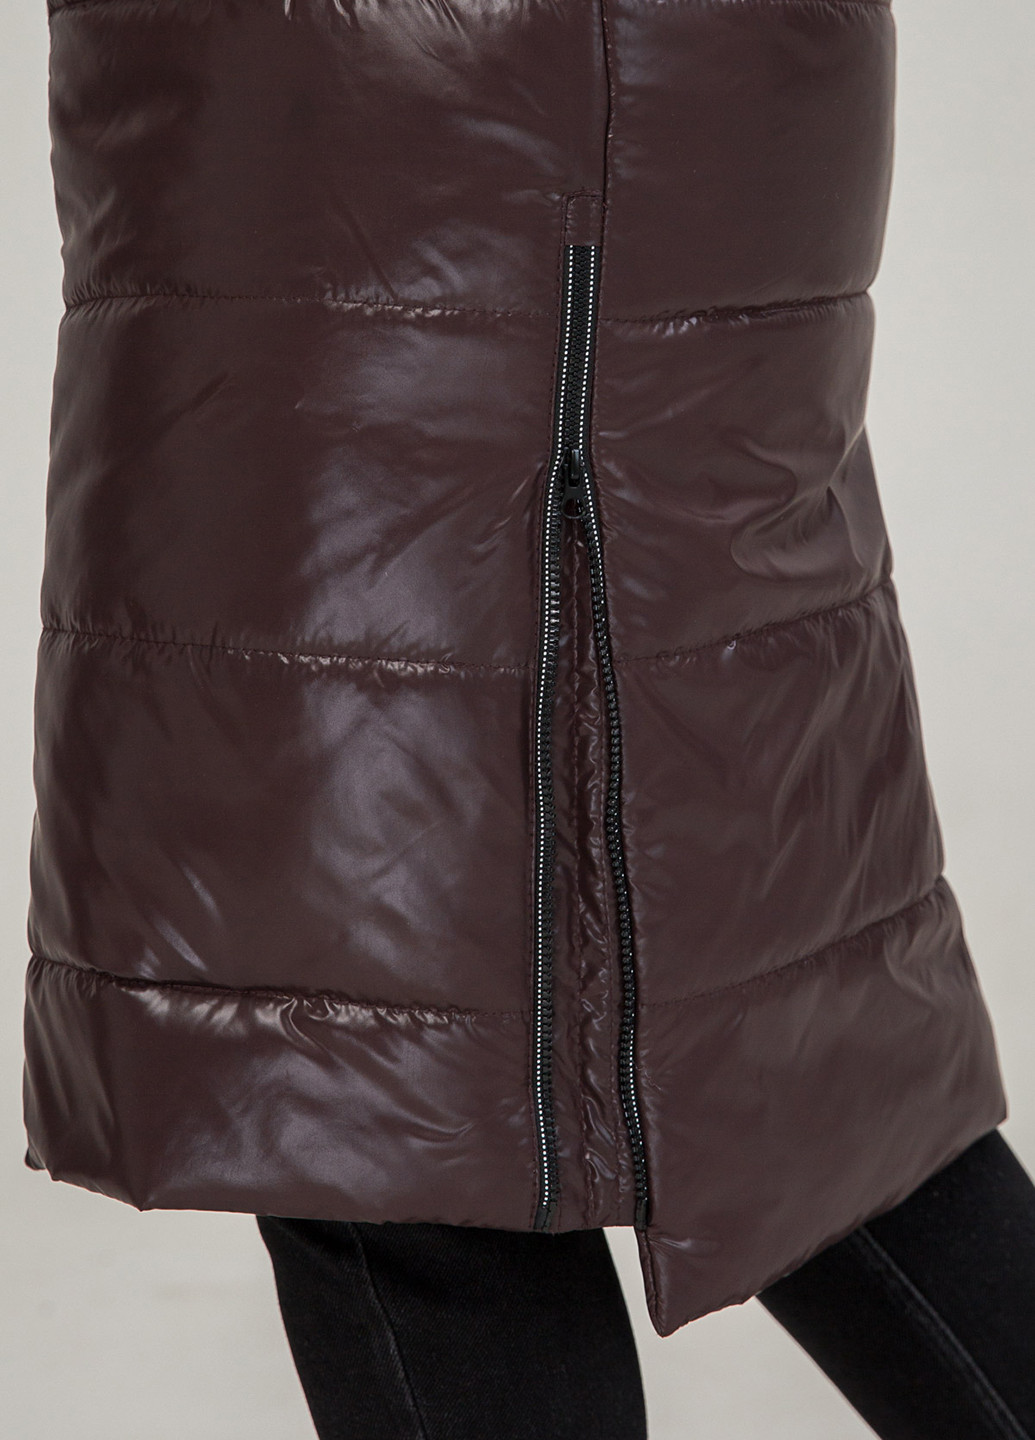 Темно-коричнева зимня куртка A'll Posa